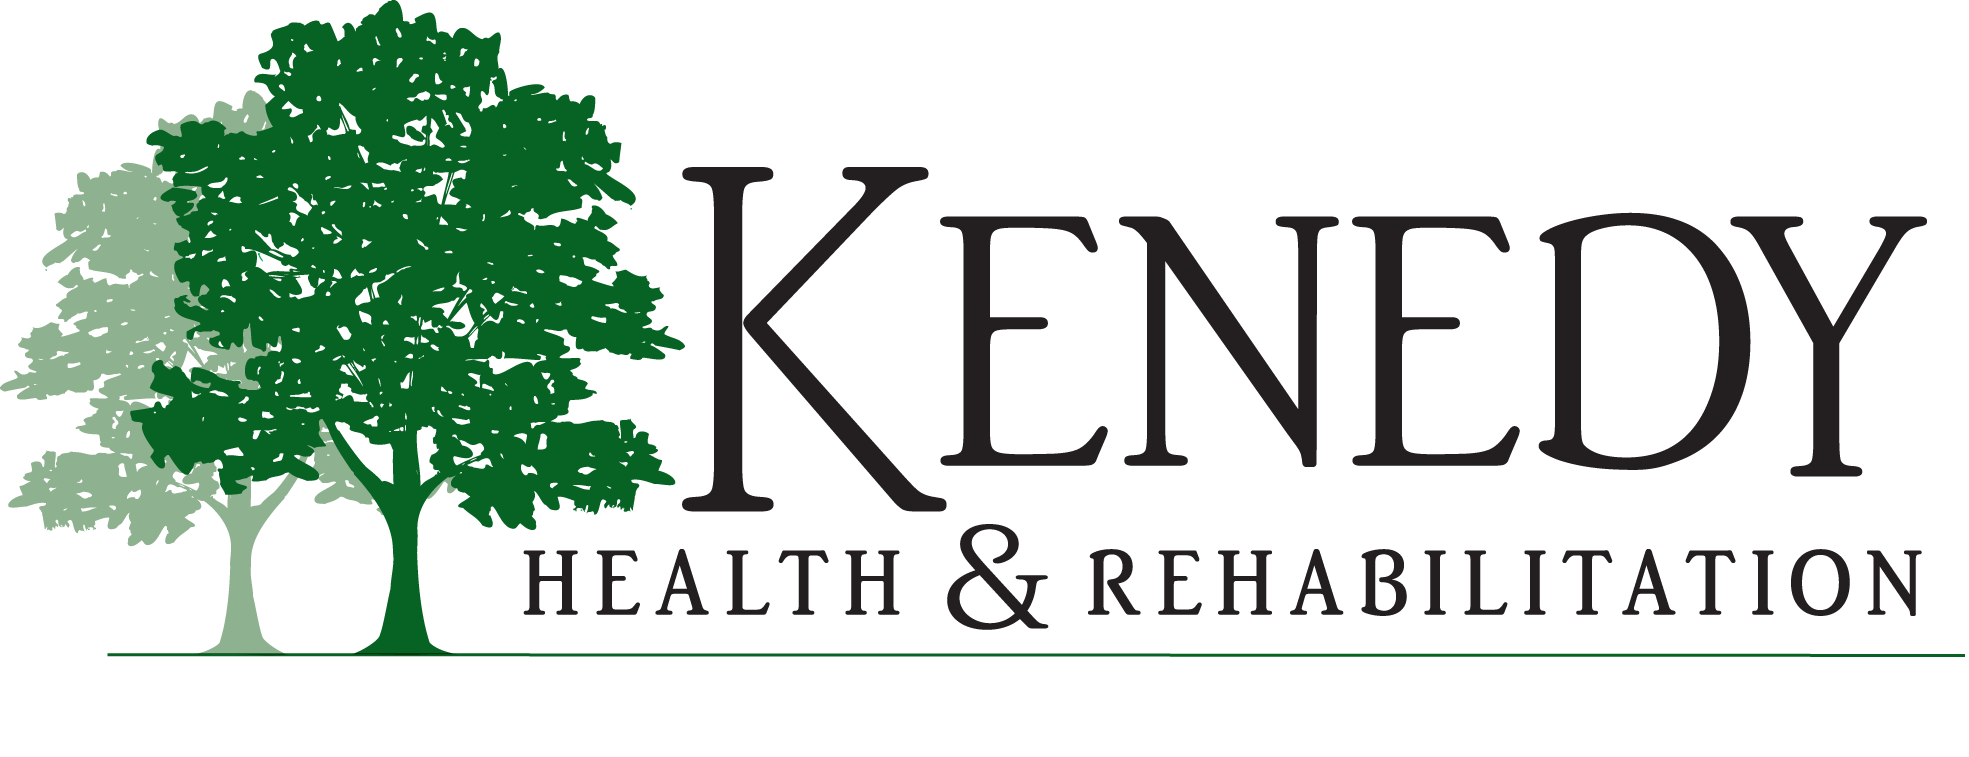 Kenedy Health & Rehabilitation